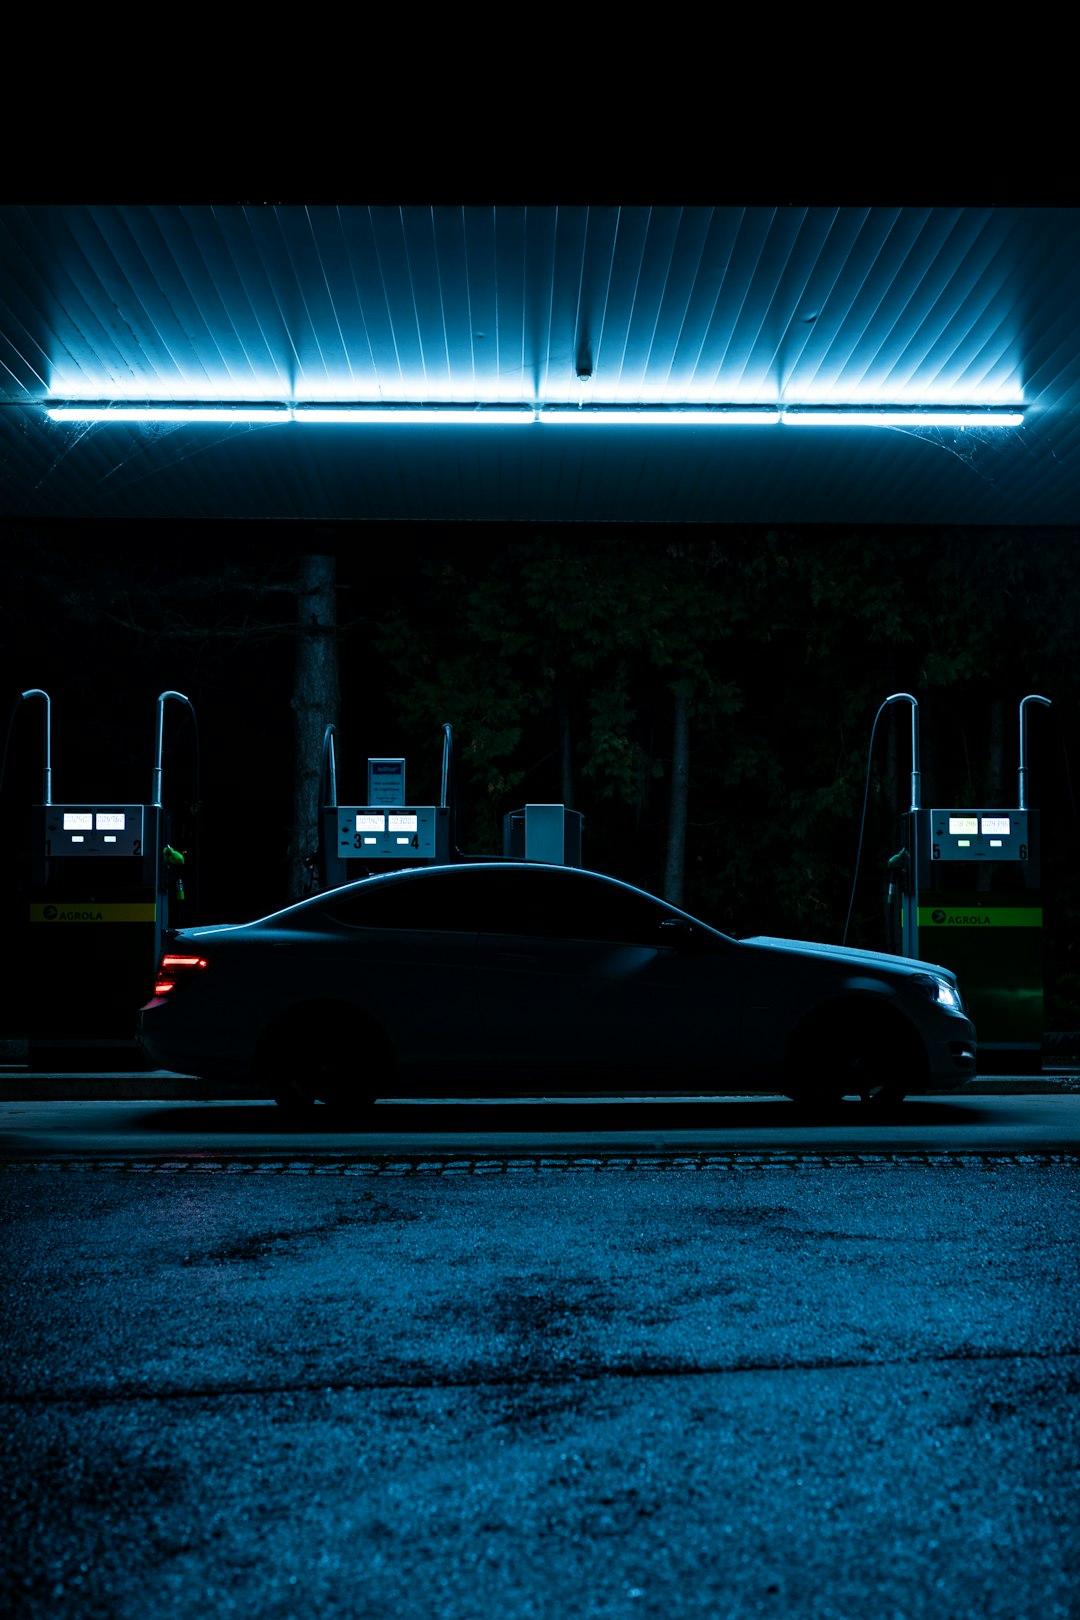 black sedan on road during night time